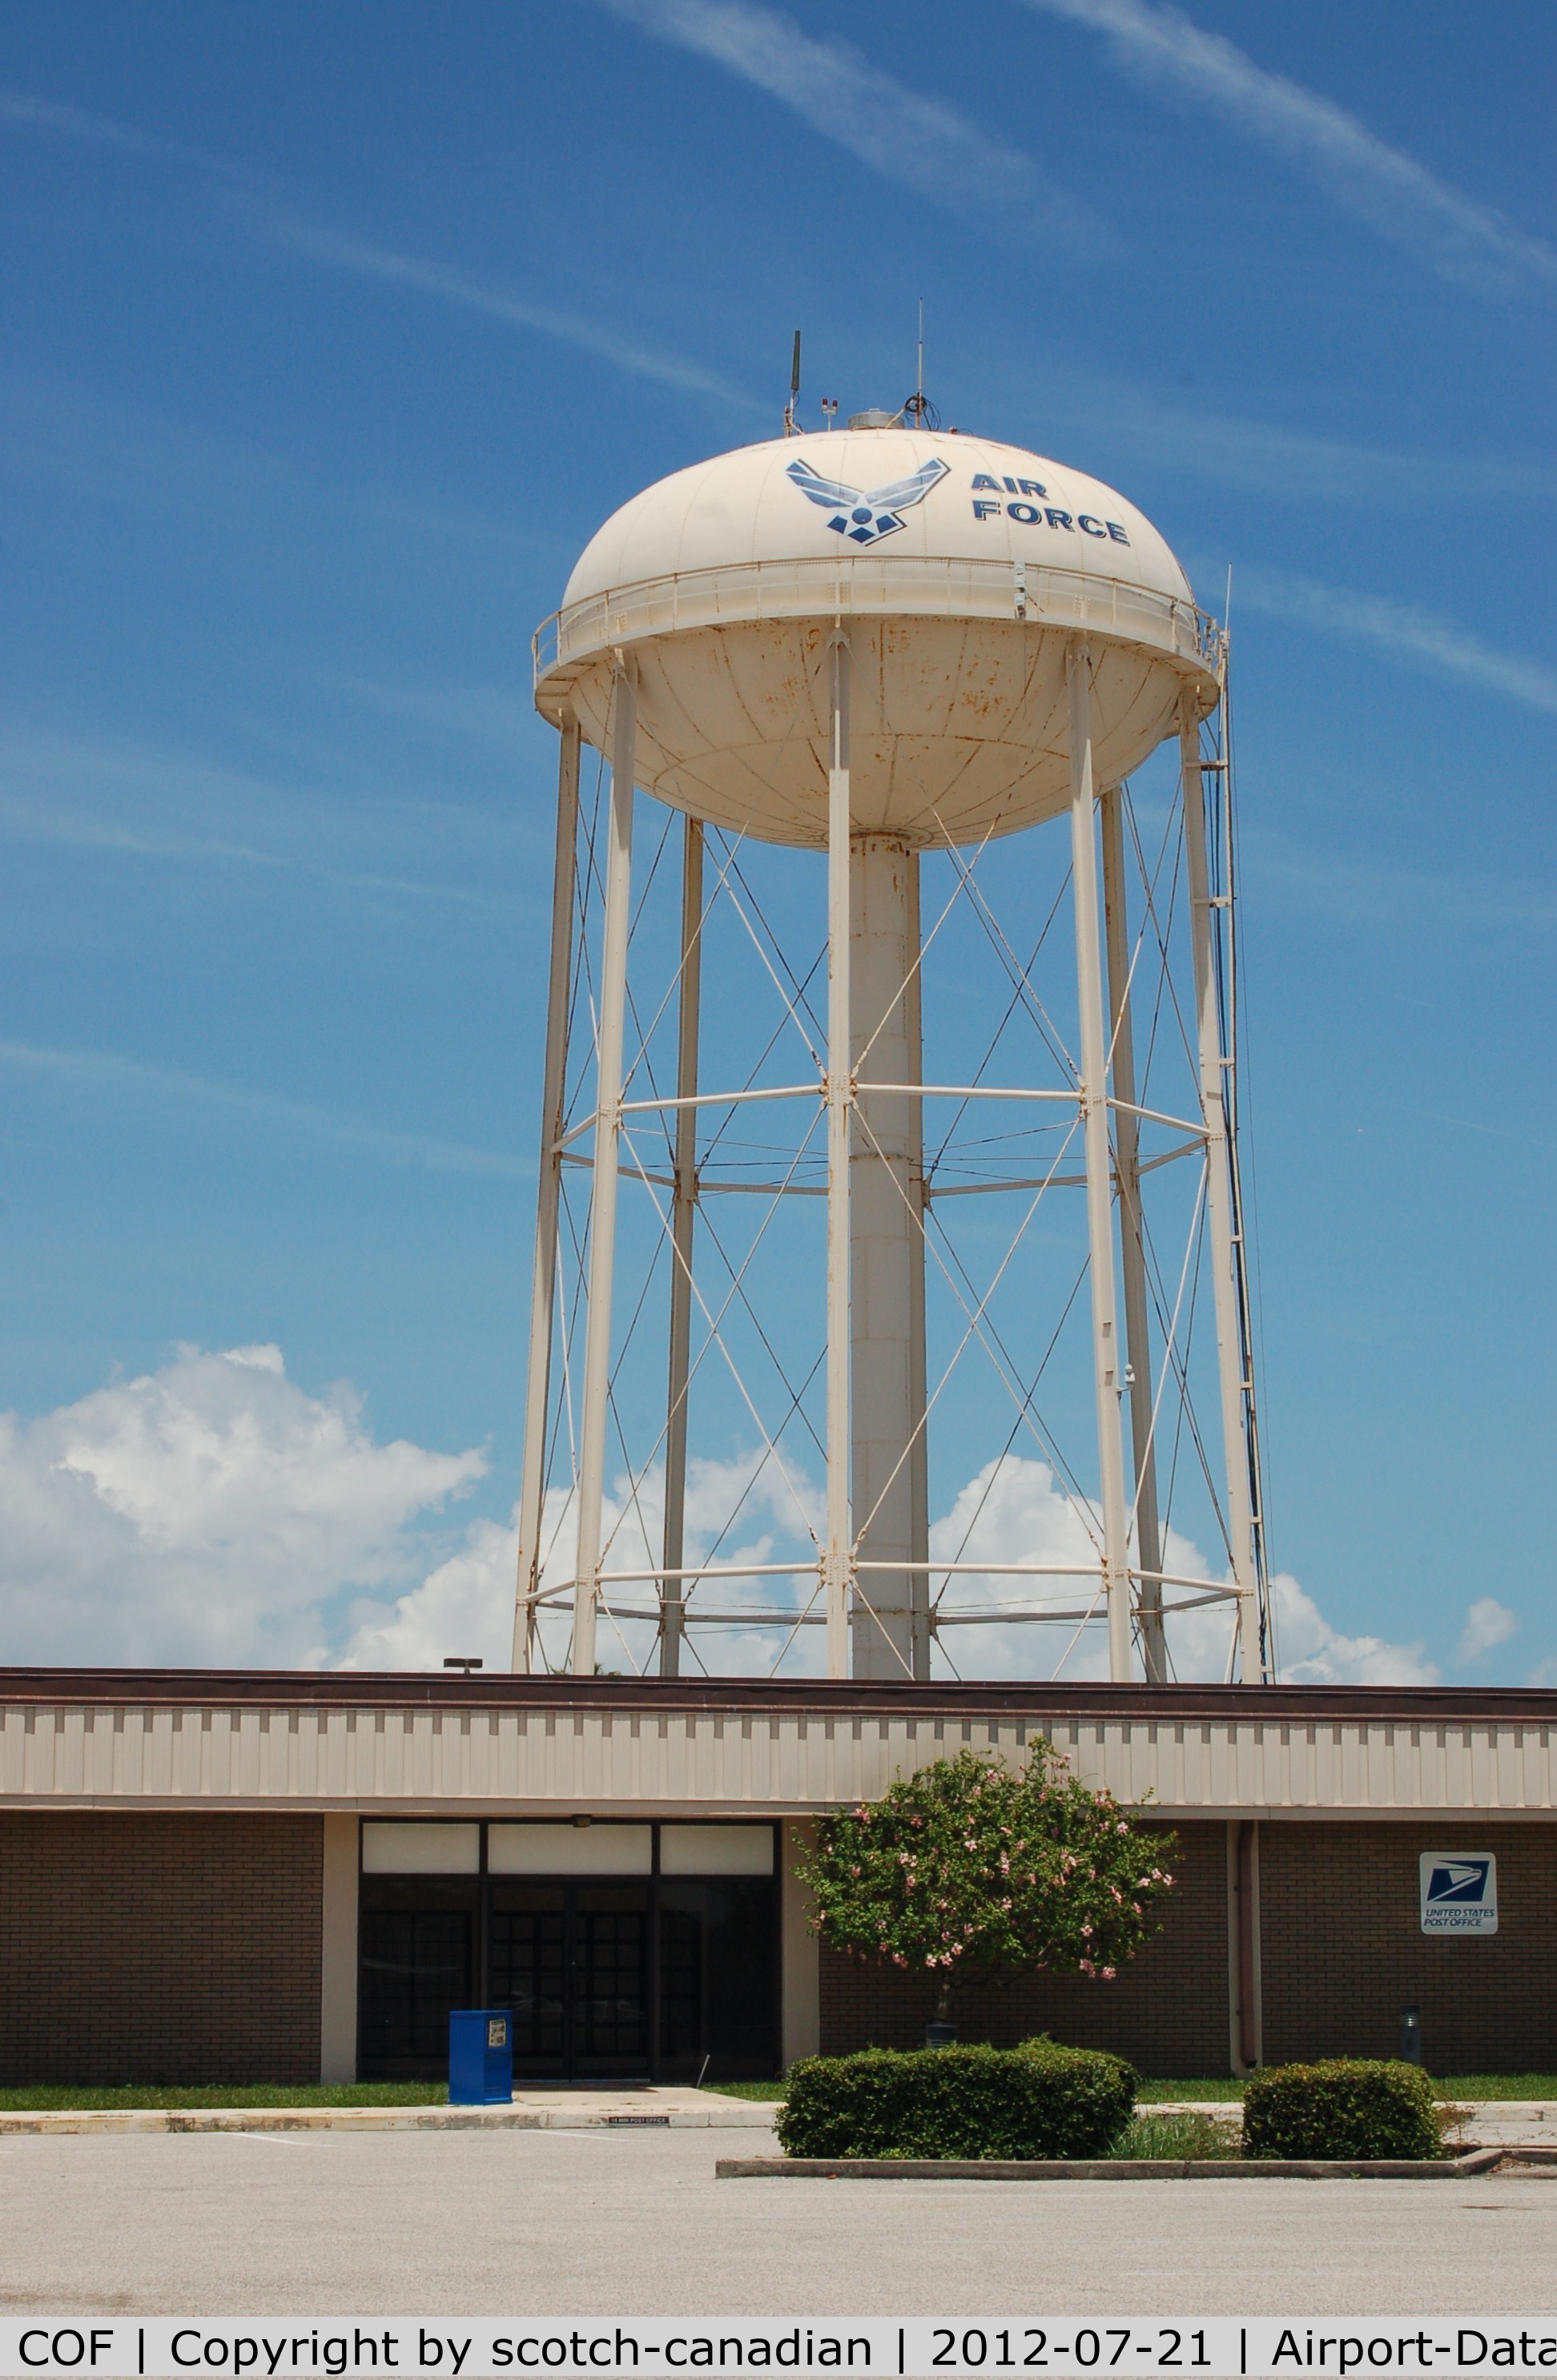 Patrick Afb Airport (COF) - Water Tank at Patrick Air Force Base, FL